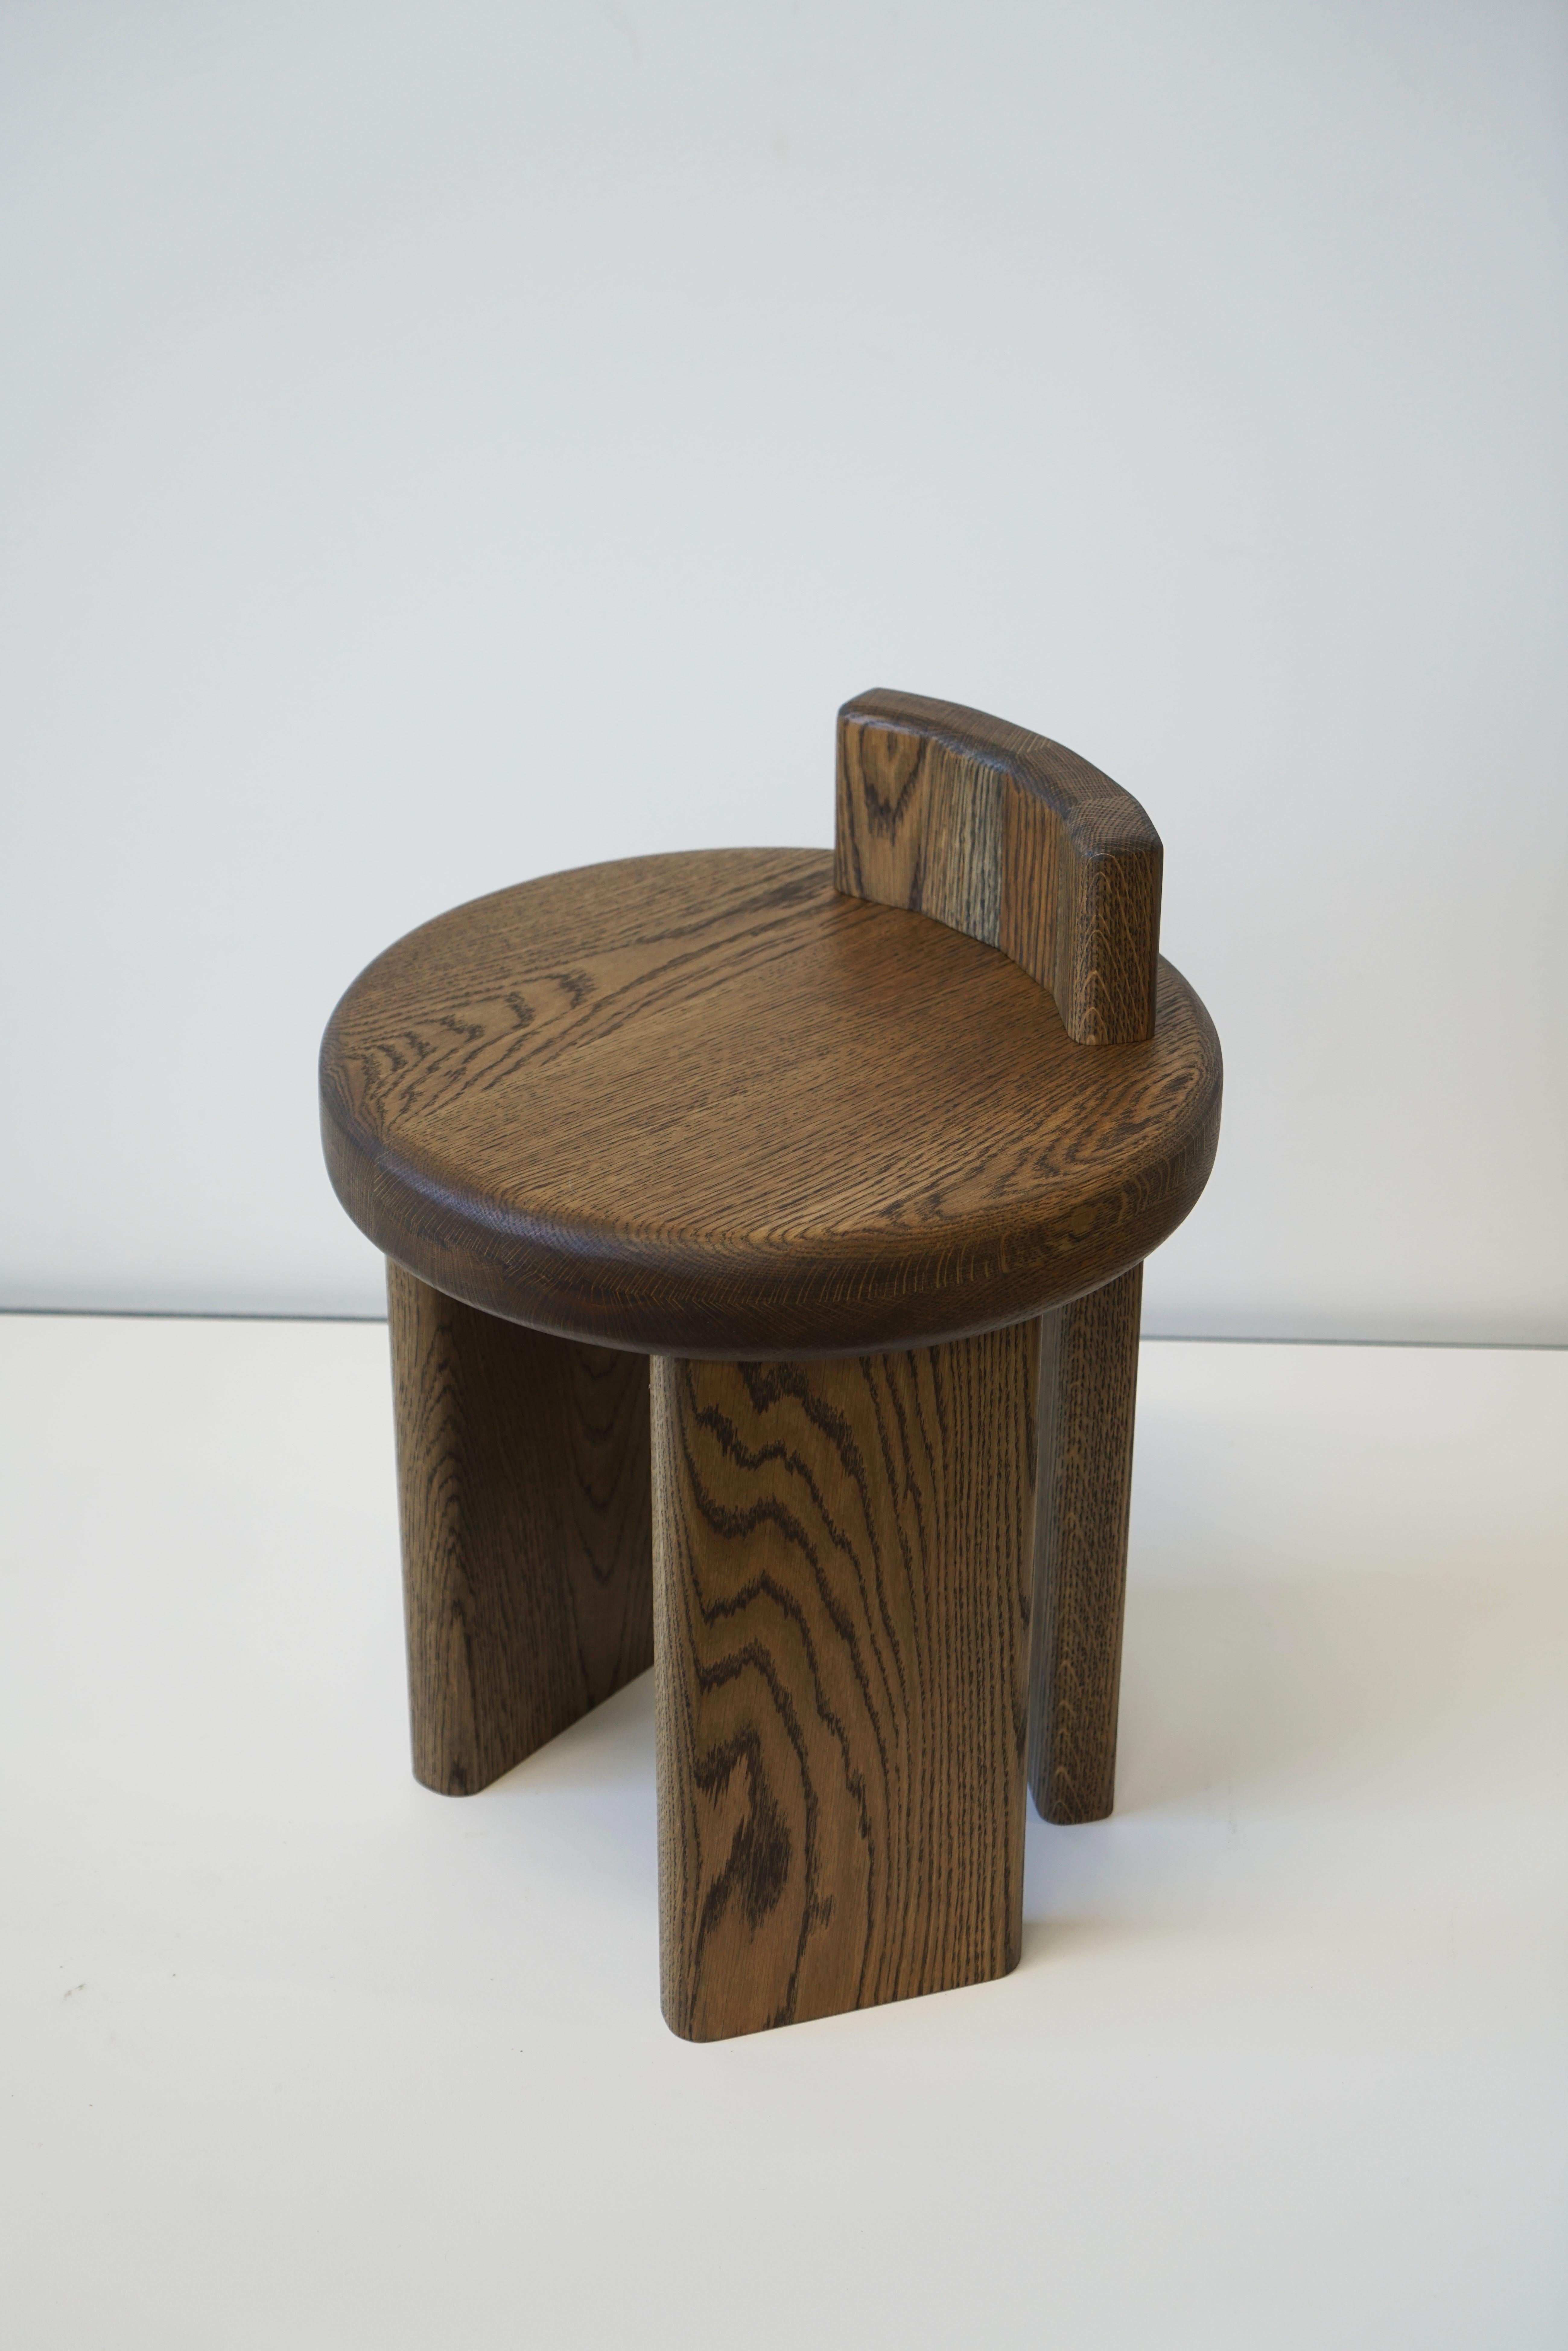 American Organic Modern Solid Wood Oak Stool or Side Table by Last Workshop For Sale